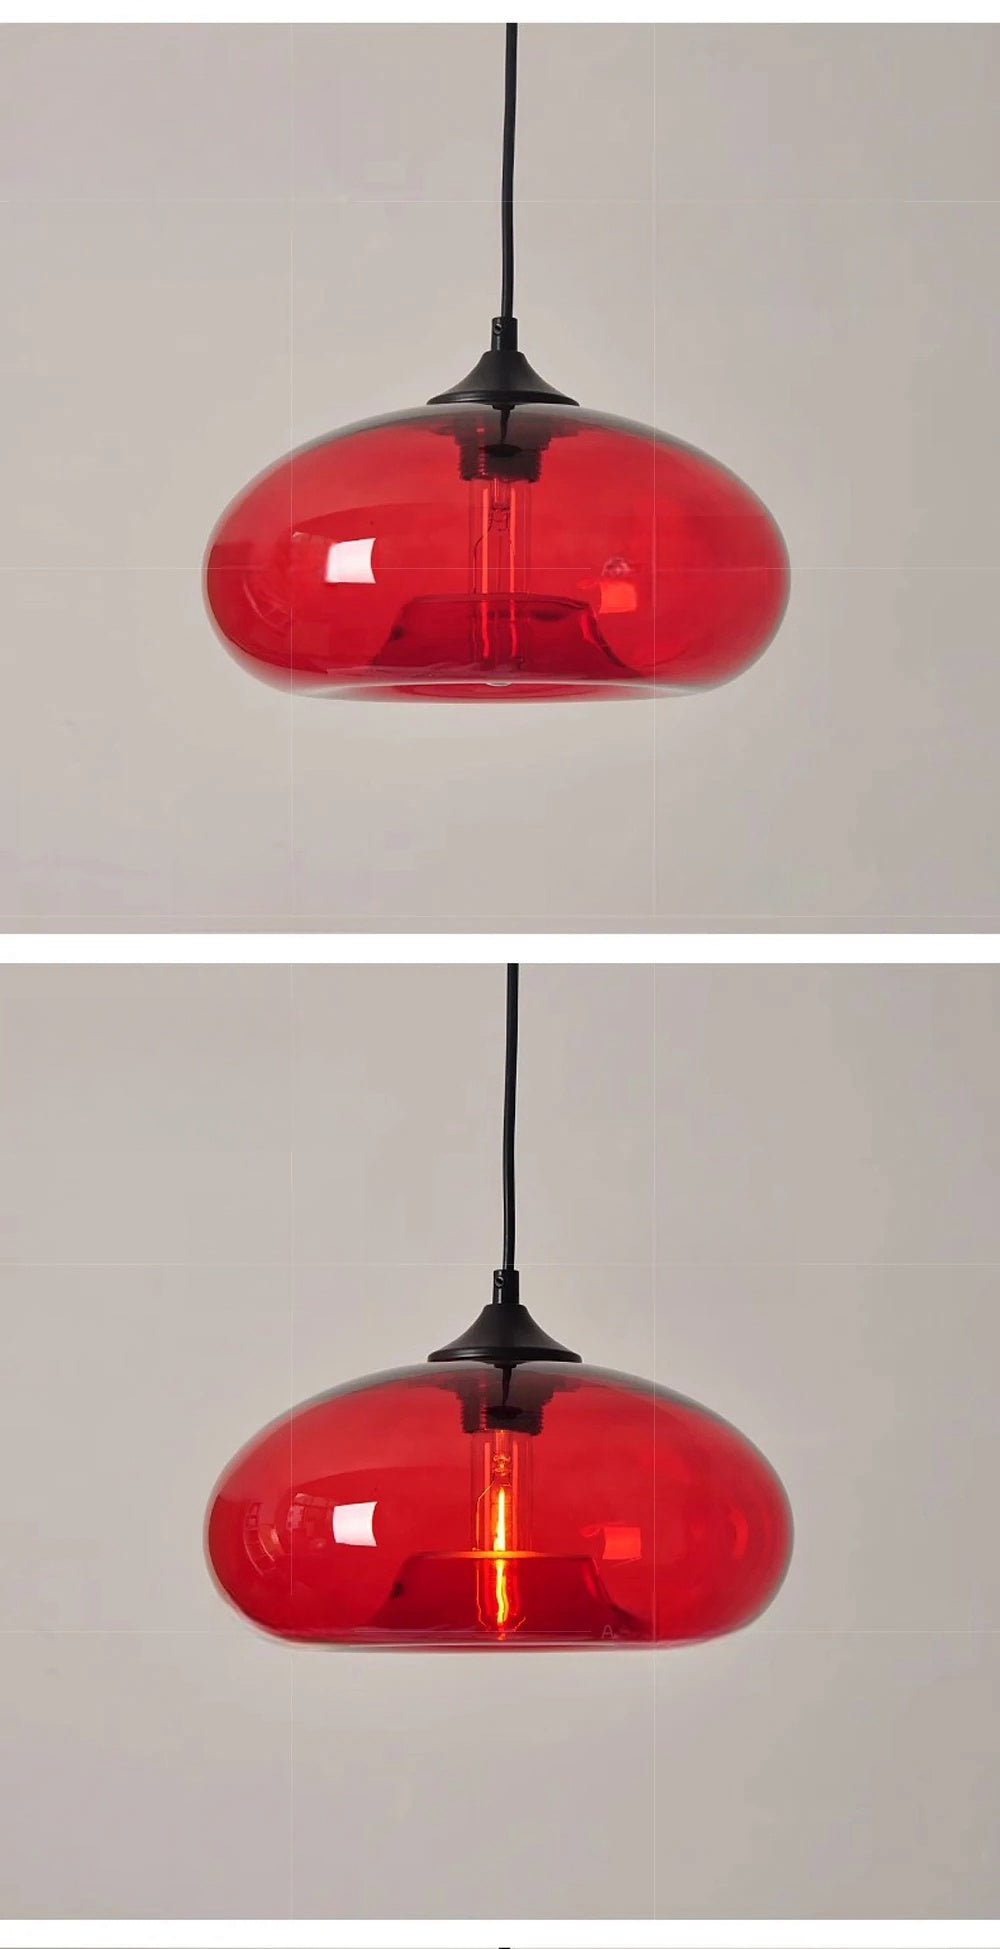 Simple Pure Oval Glass Pendant Lights